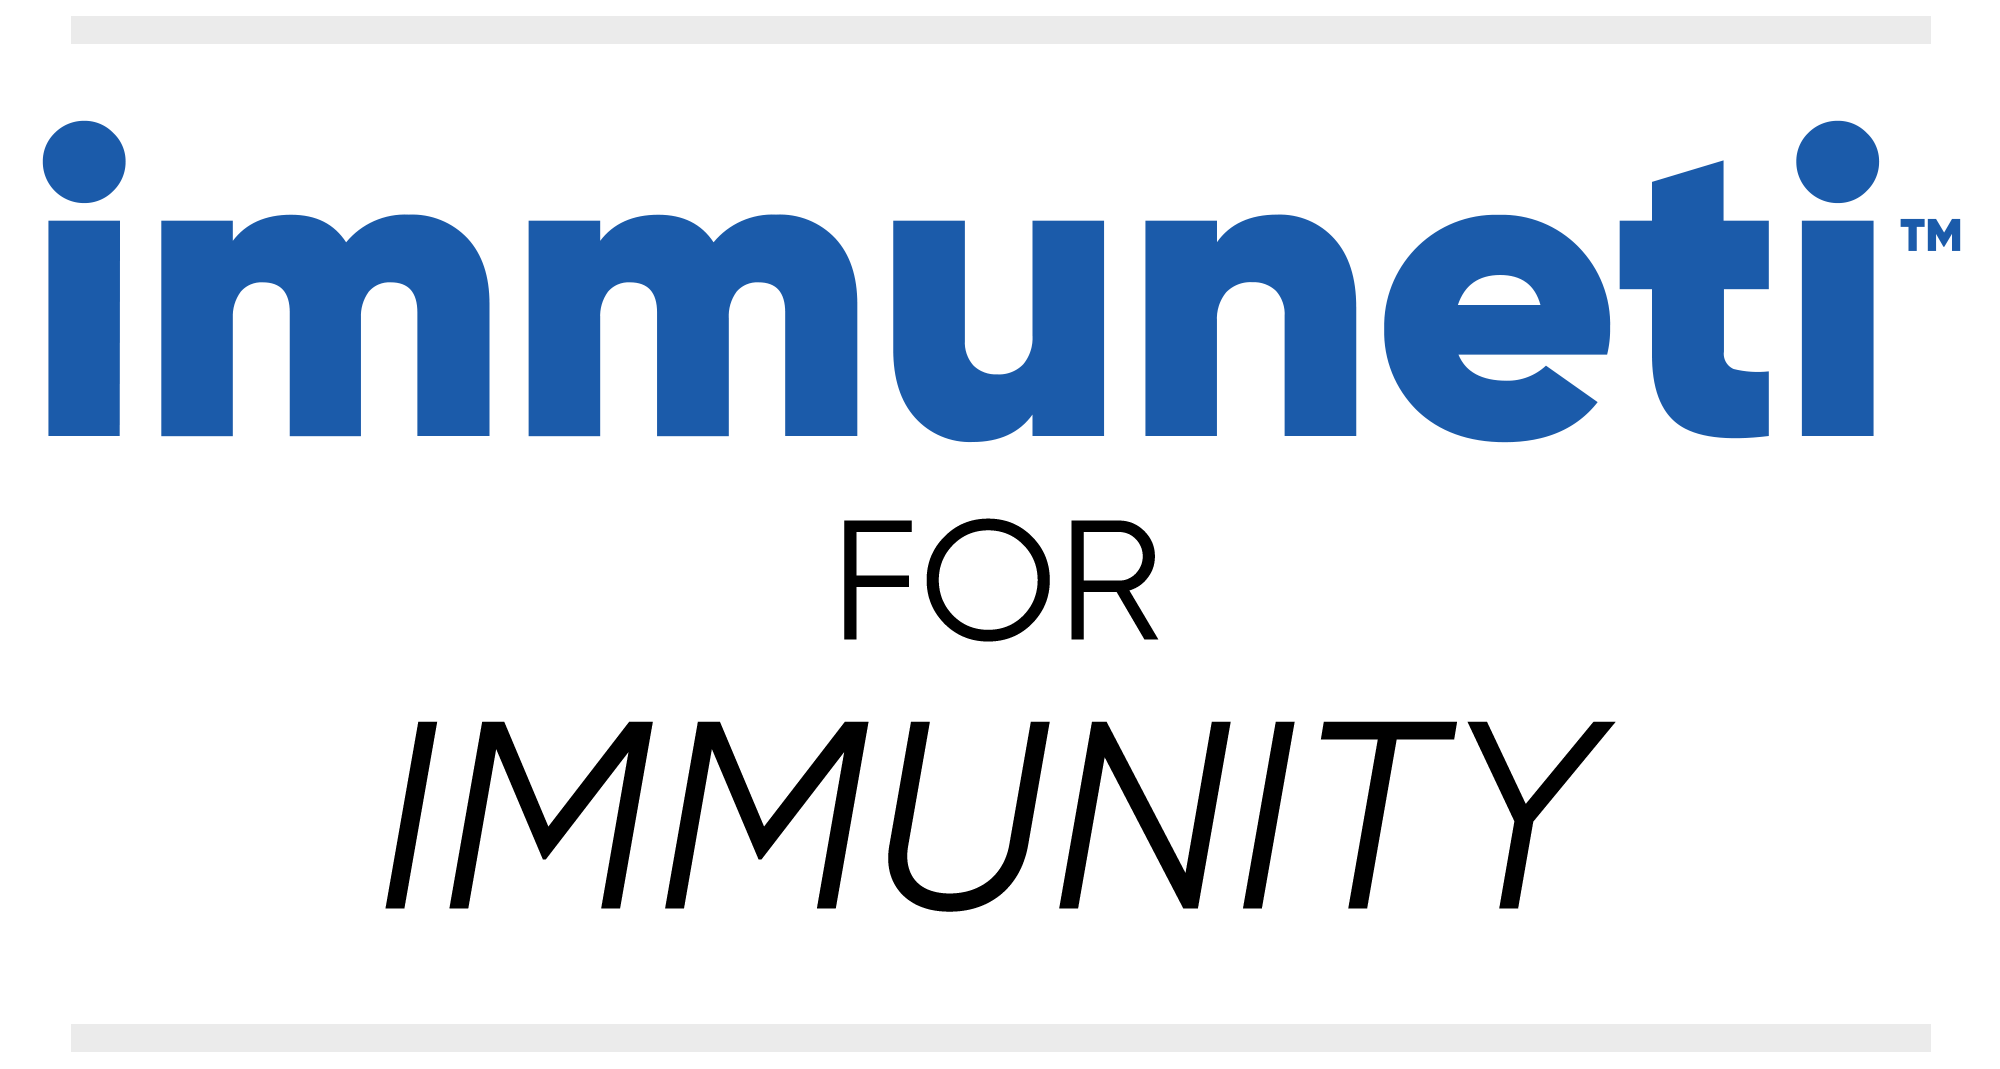 Immuneti for Immunity